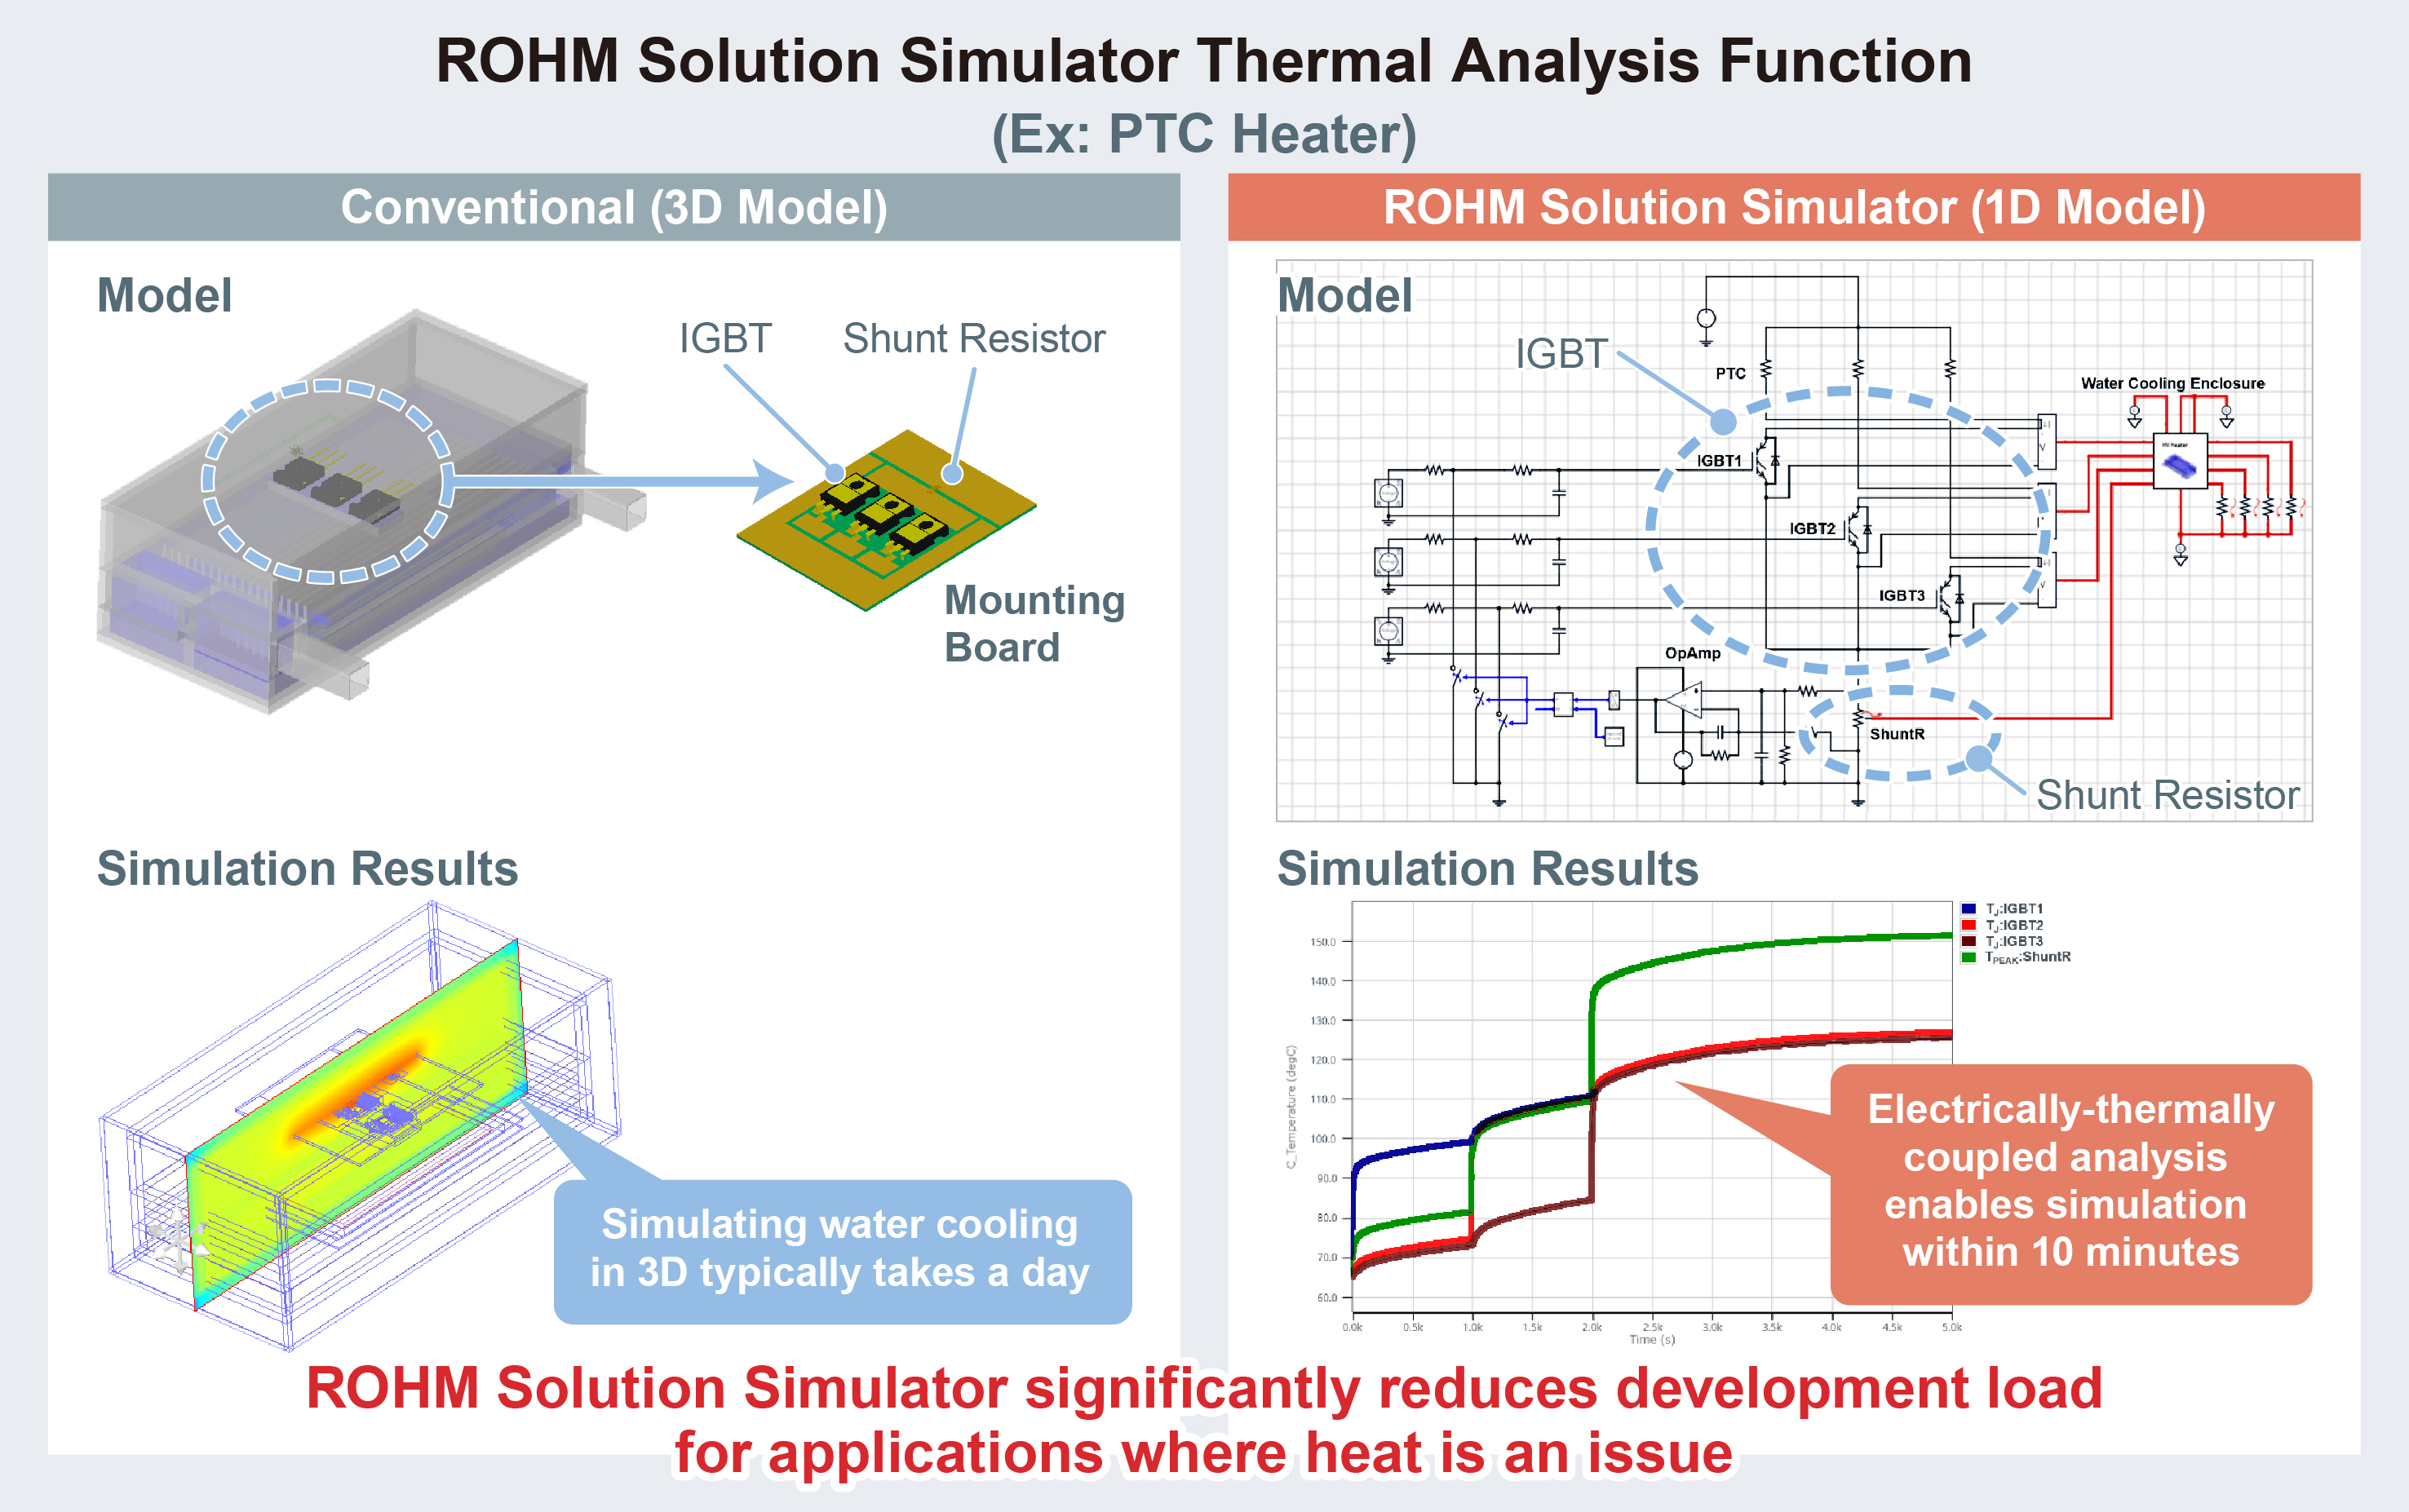 Comparison of Conventional 3D Model vs. ROHM Solution Simulator 1D Model